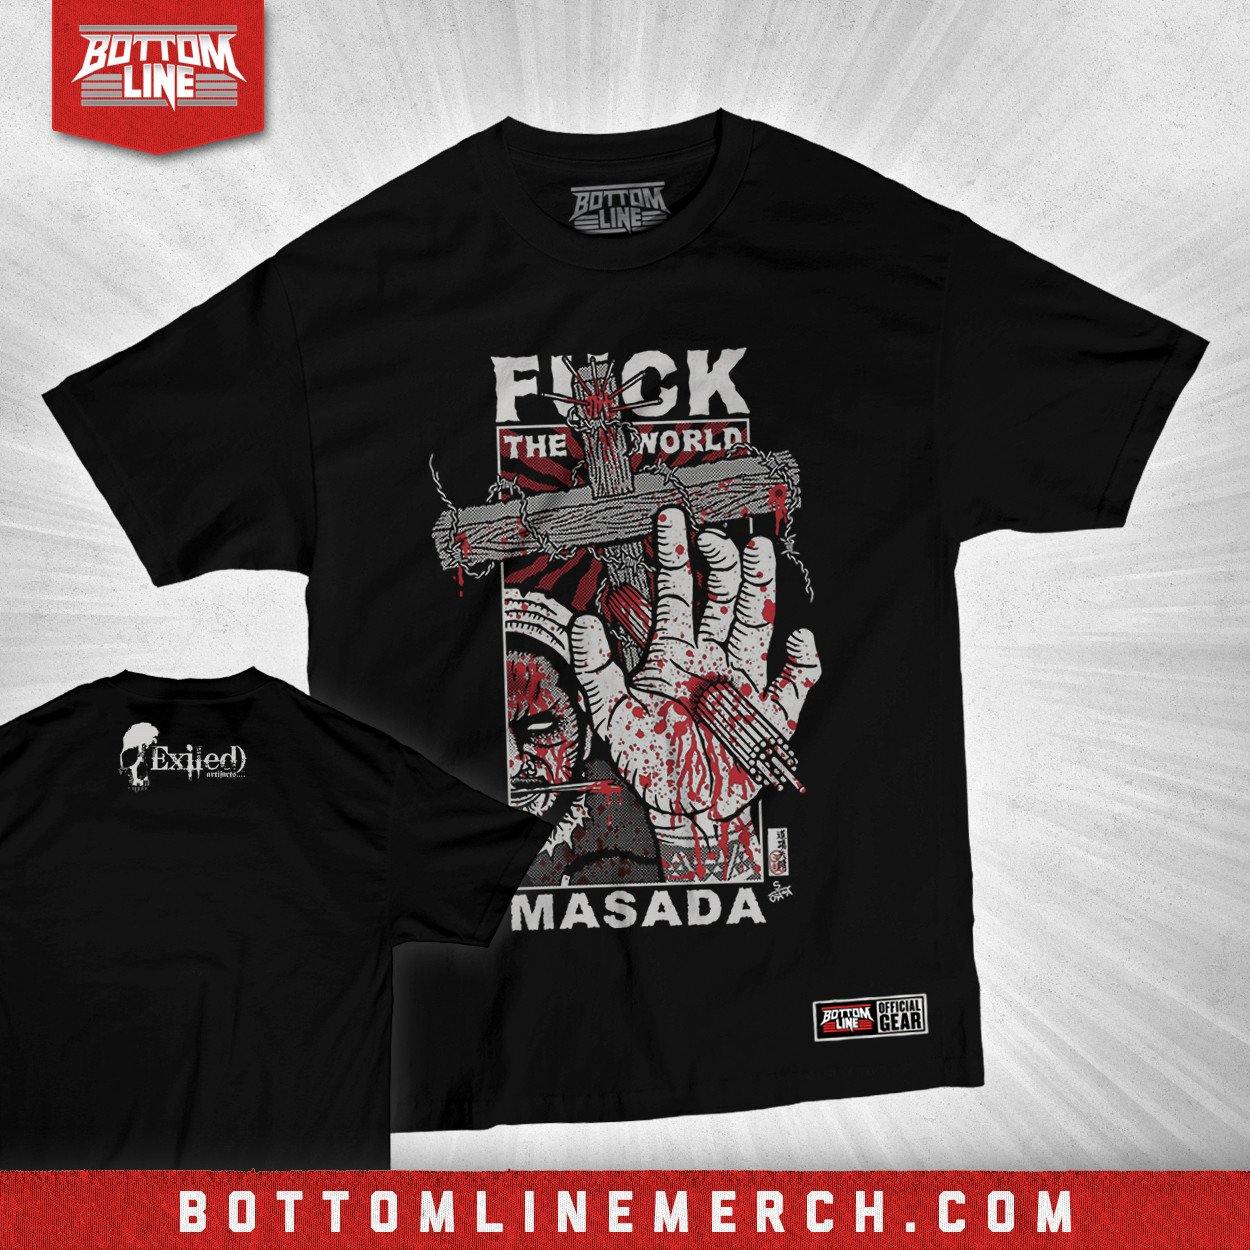 Buy Now – Masada "FTW" Shirt – Wrestler & Wrestling Merch – Bottom Line